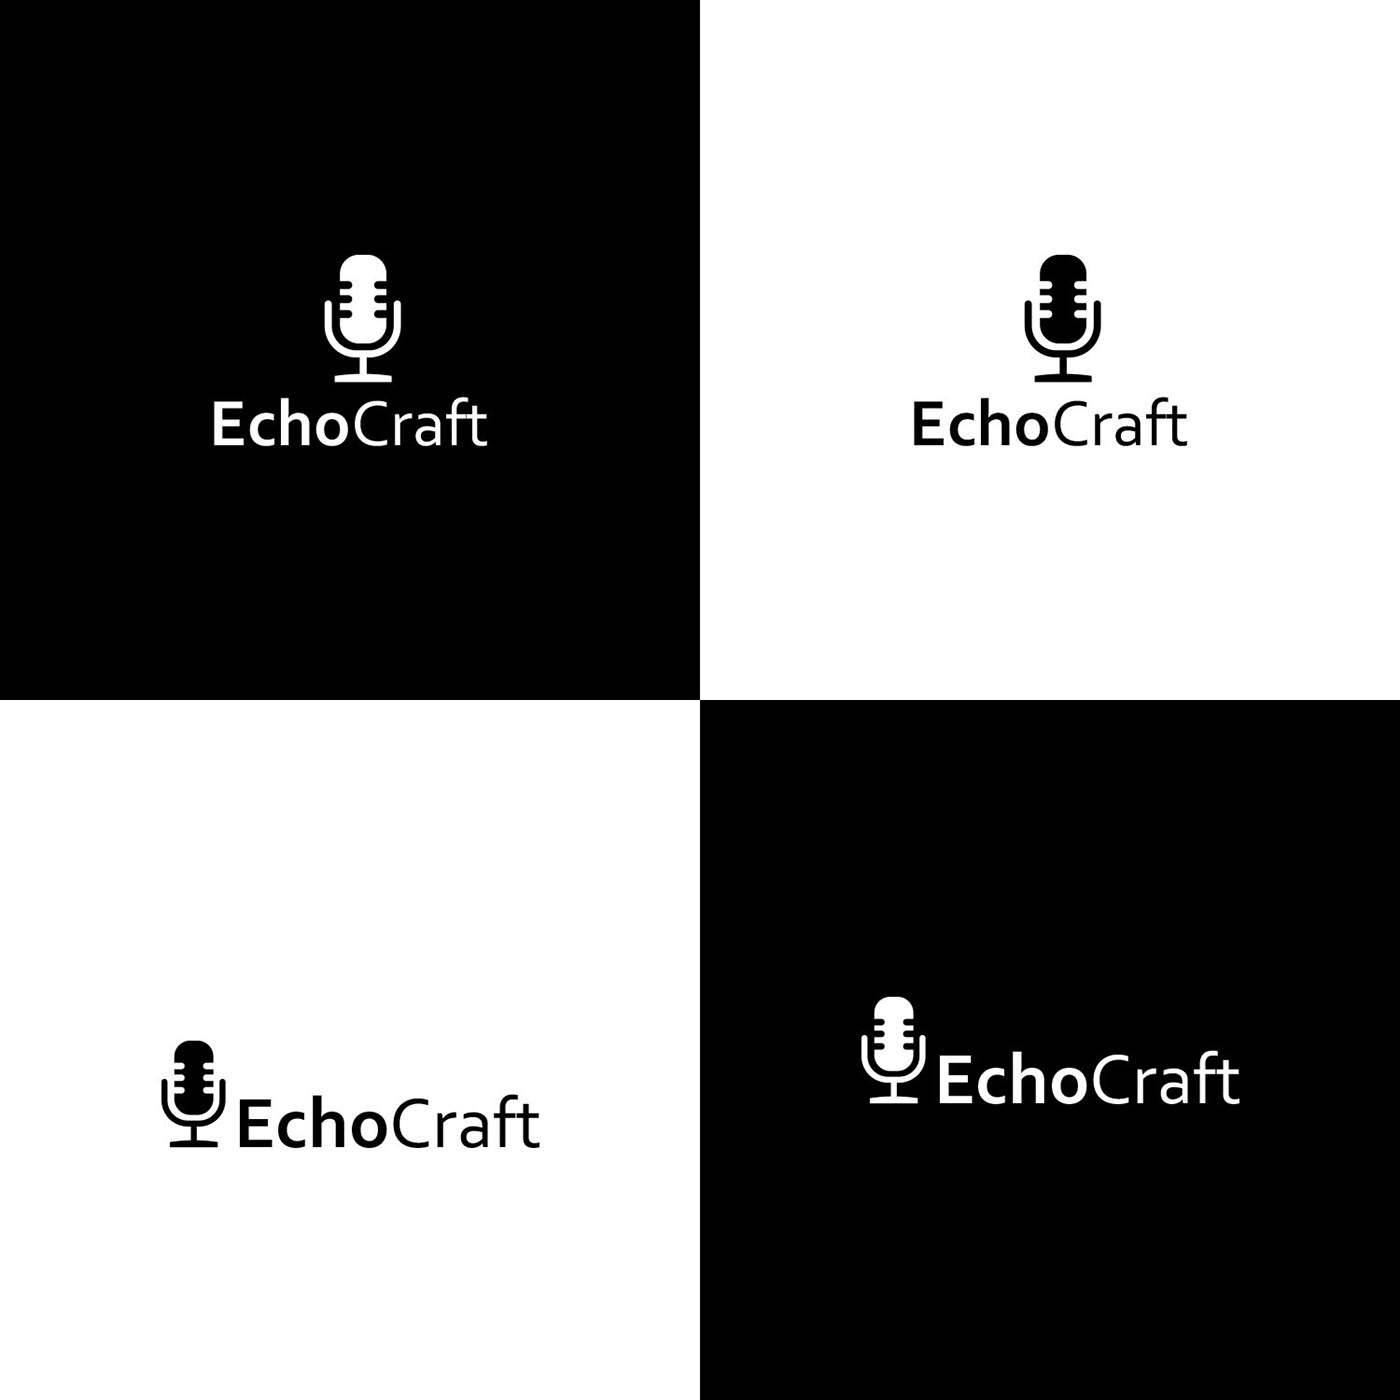 Echo Craft logo: Incorporates sound waves, reflecting audio editing and production.